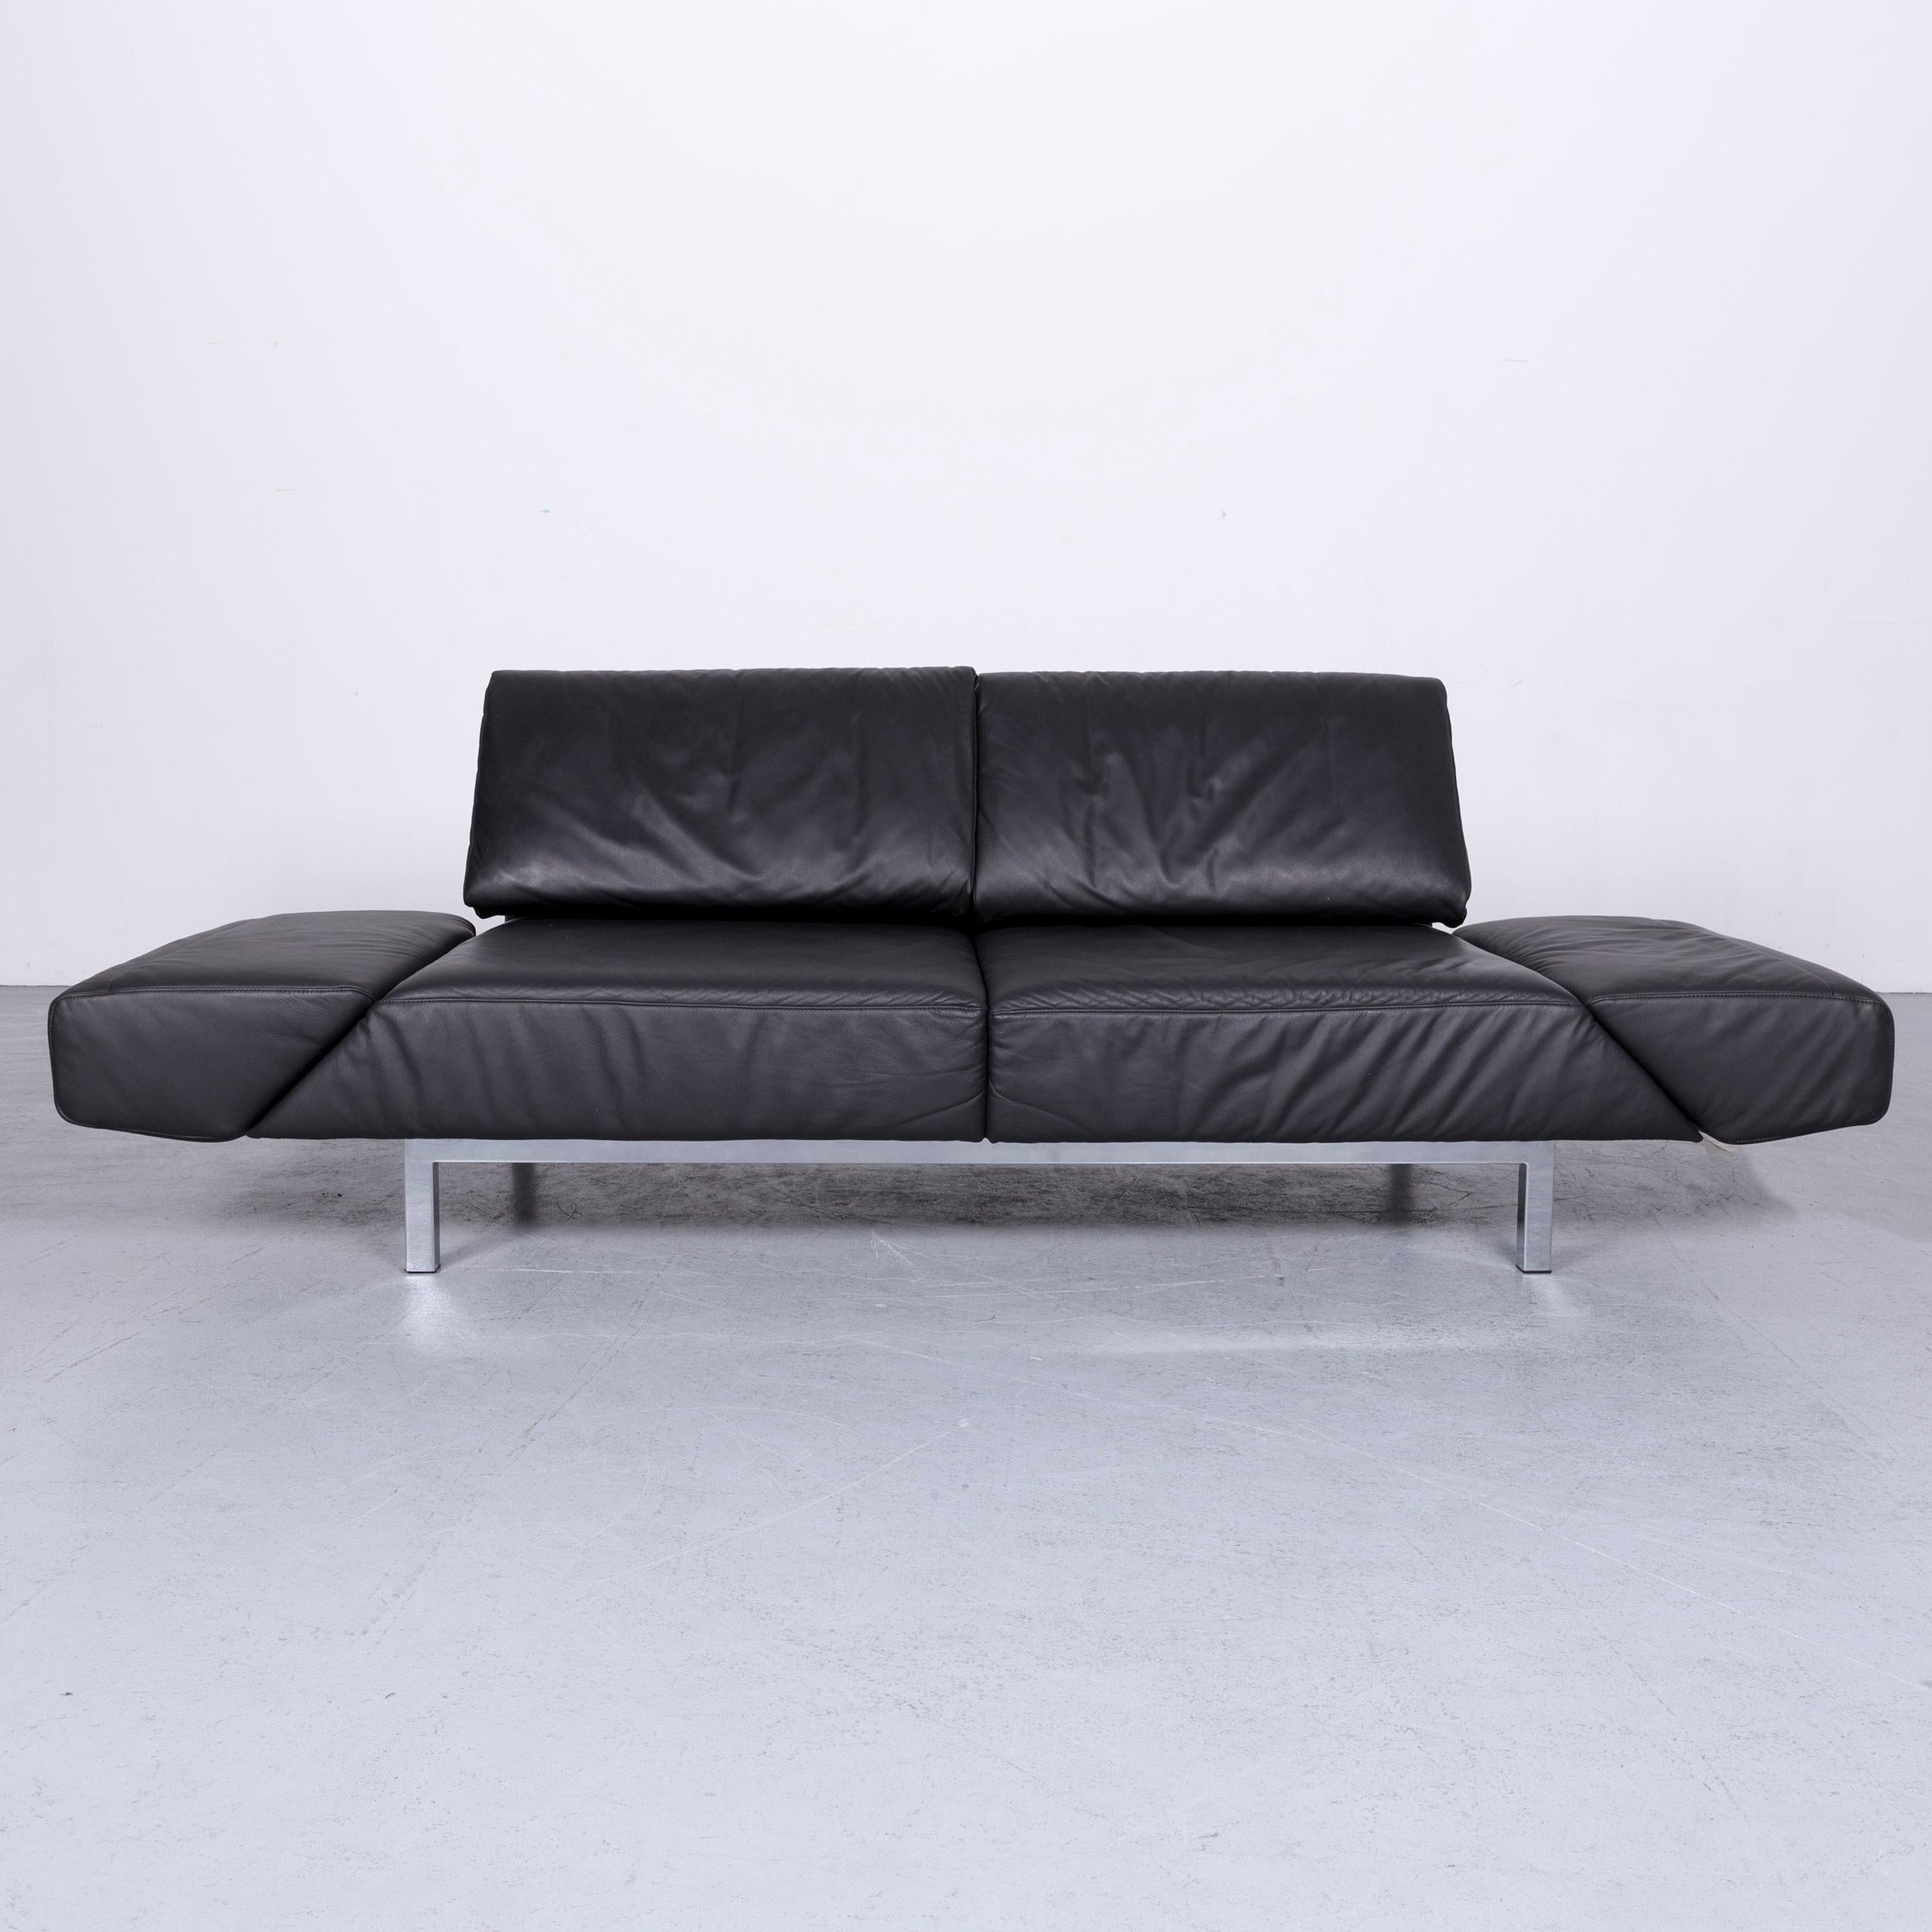 German Mondo Relaxa Designer Three-Seat Sofa Leather Black Function Couch